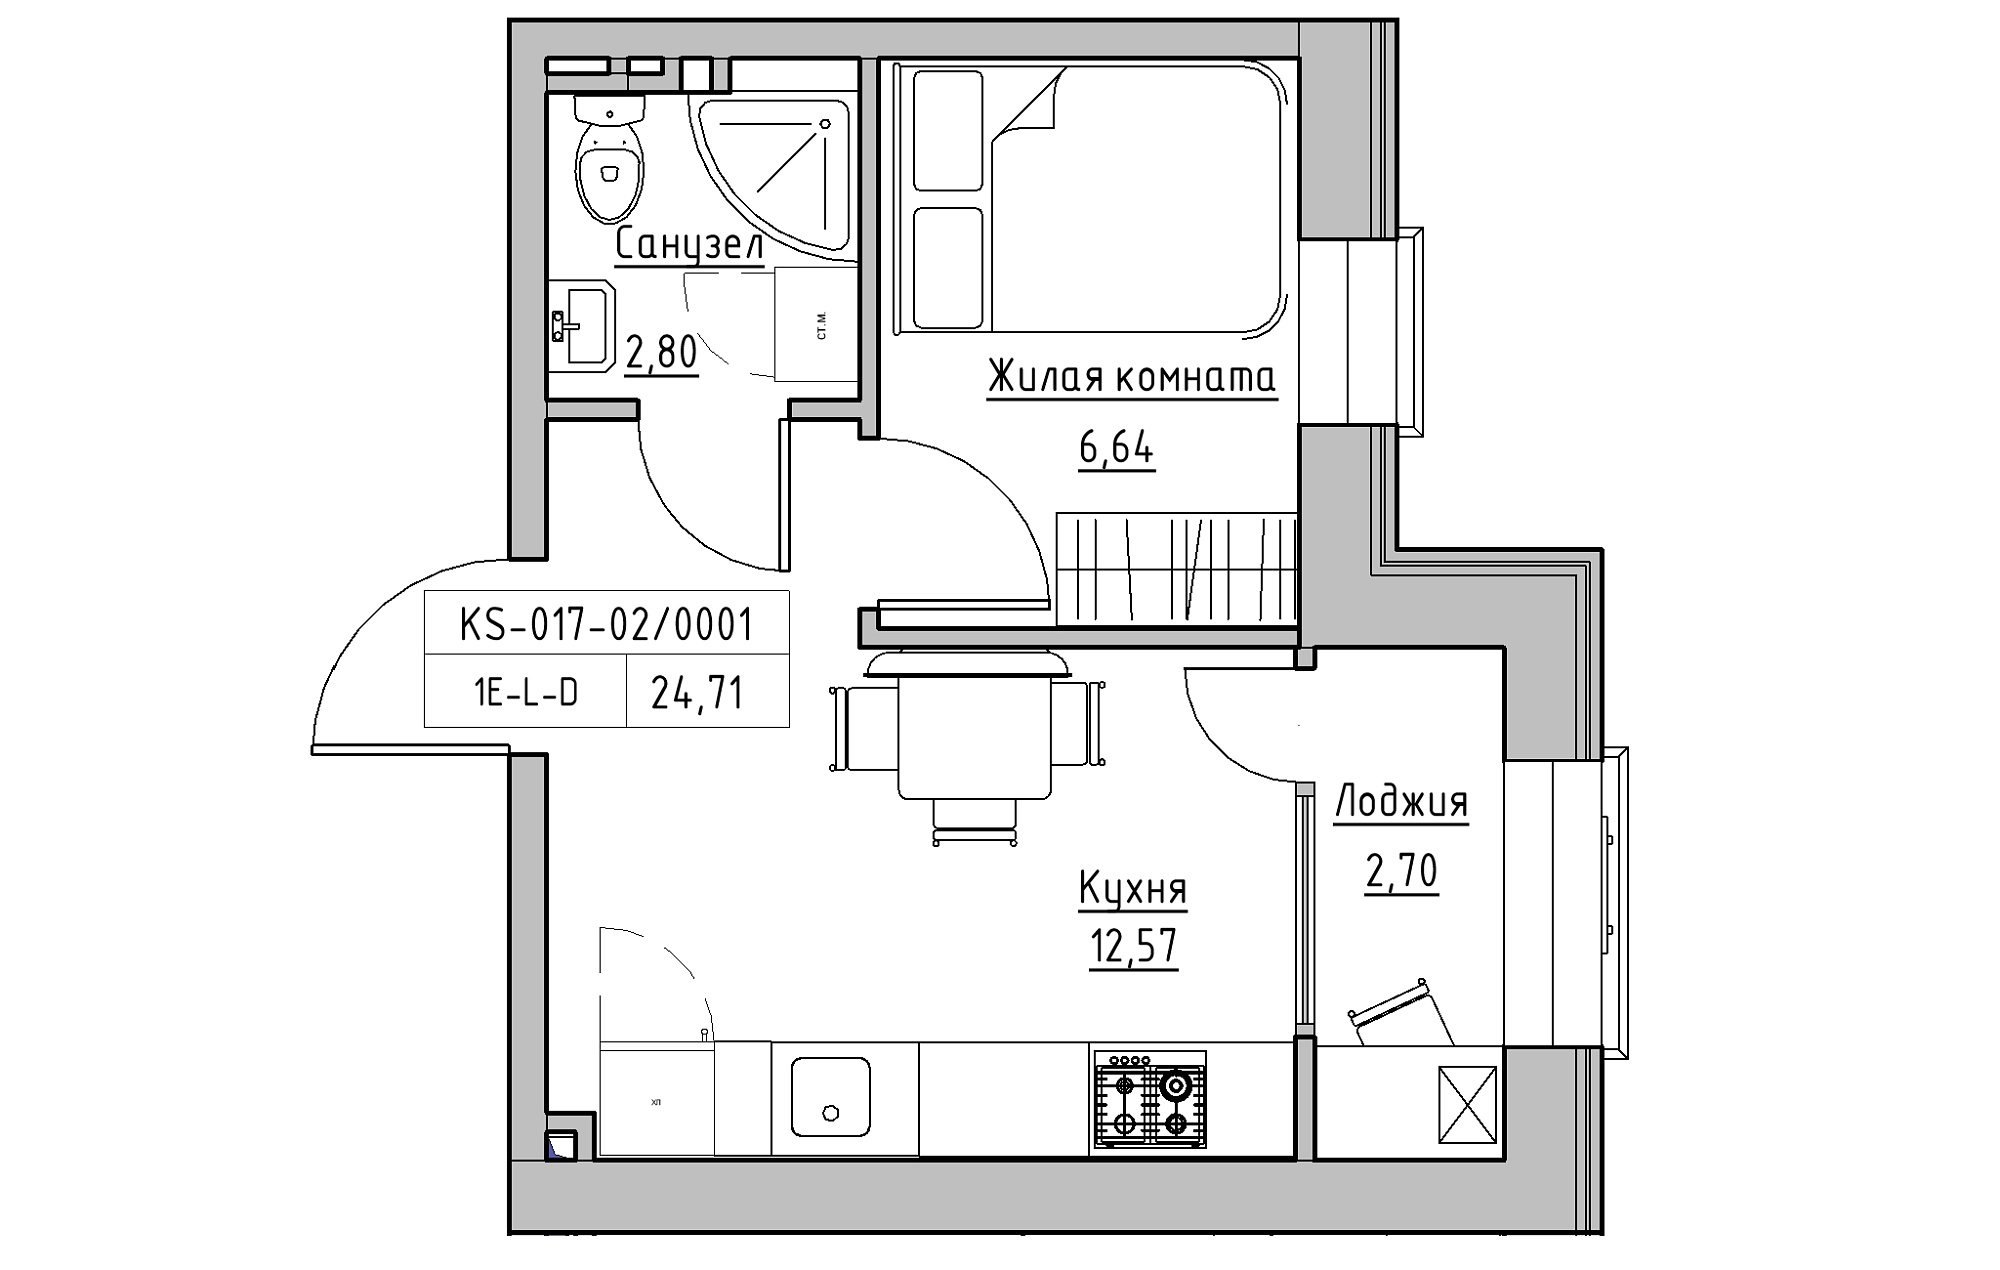 Planning 1-rm flats area 24.71m2, KS-017-02/0001.